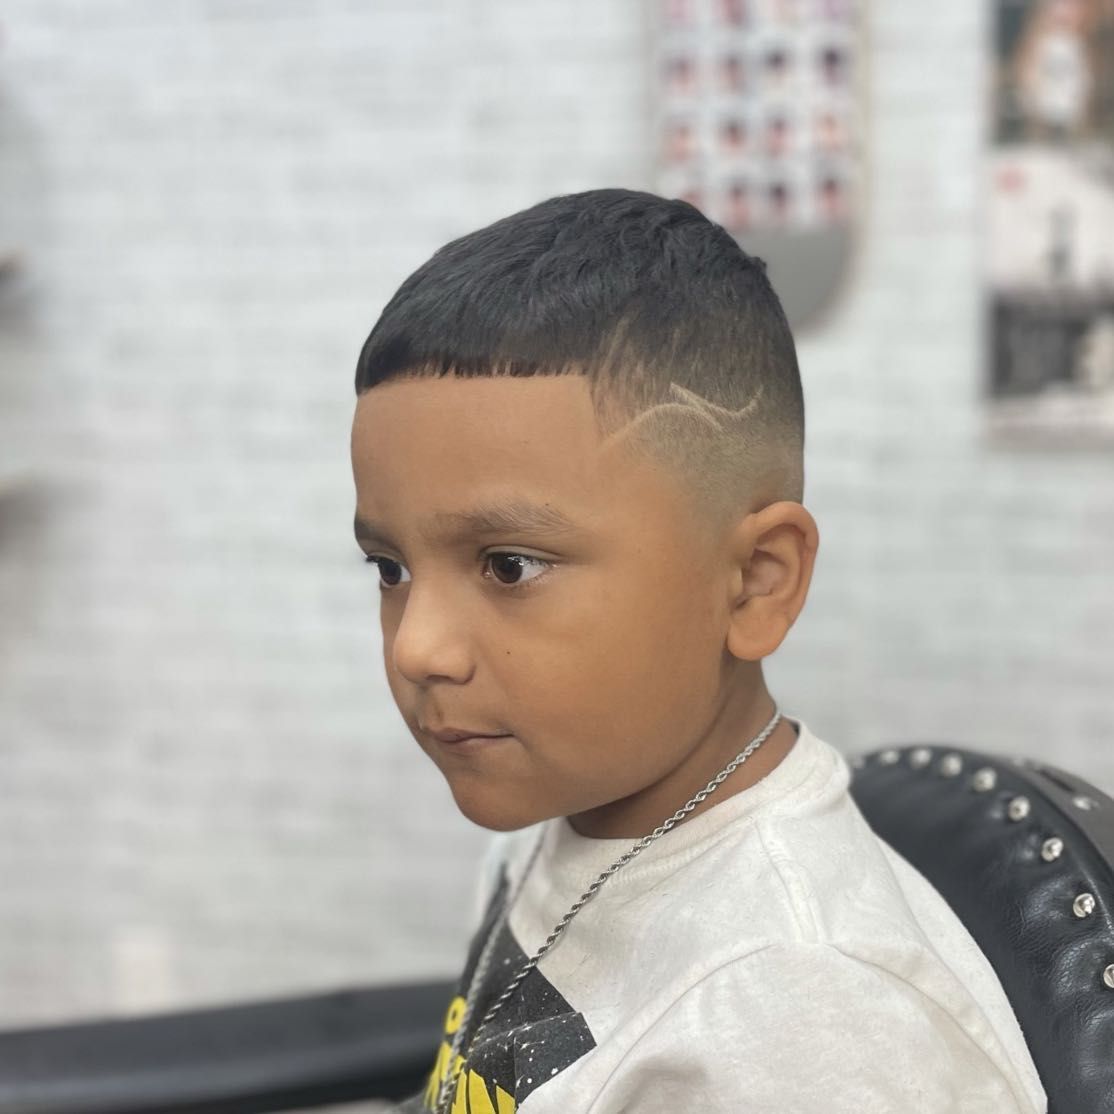 Kids Haircut portfolio